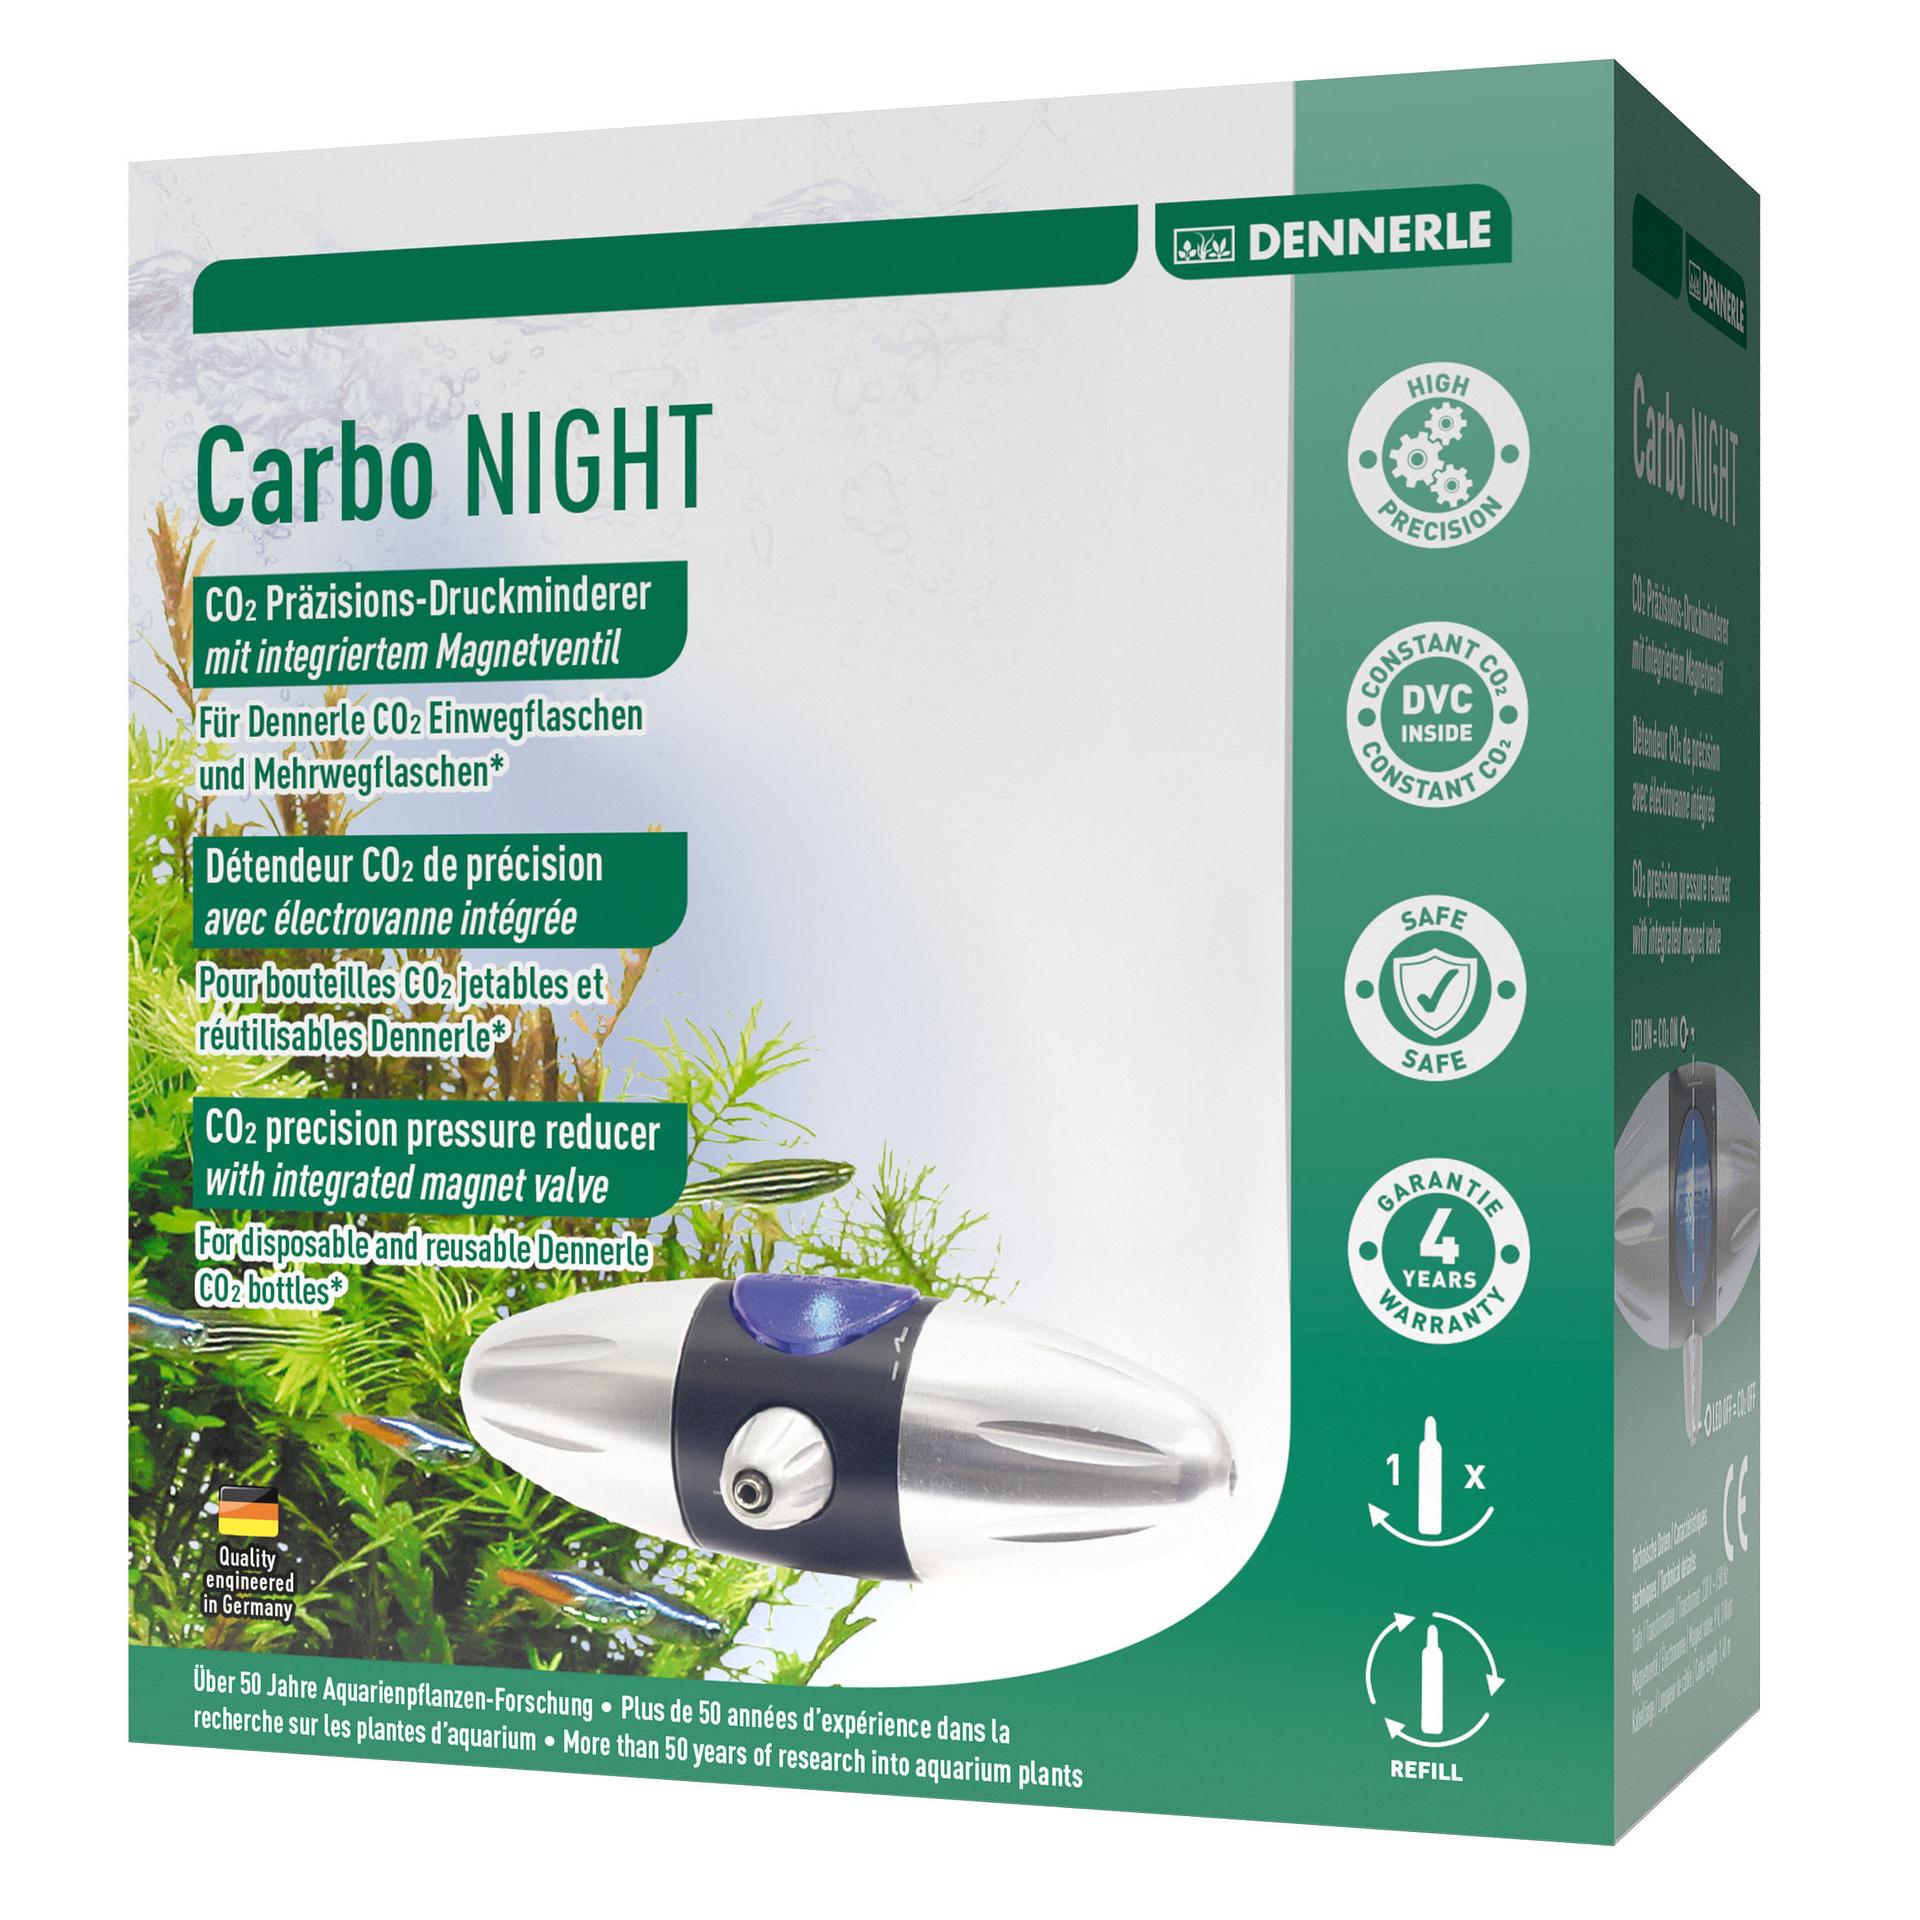 Dennerle CO2 Druckminderer Carbo Night bestellen